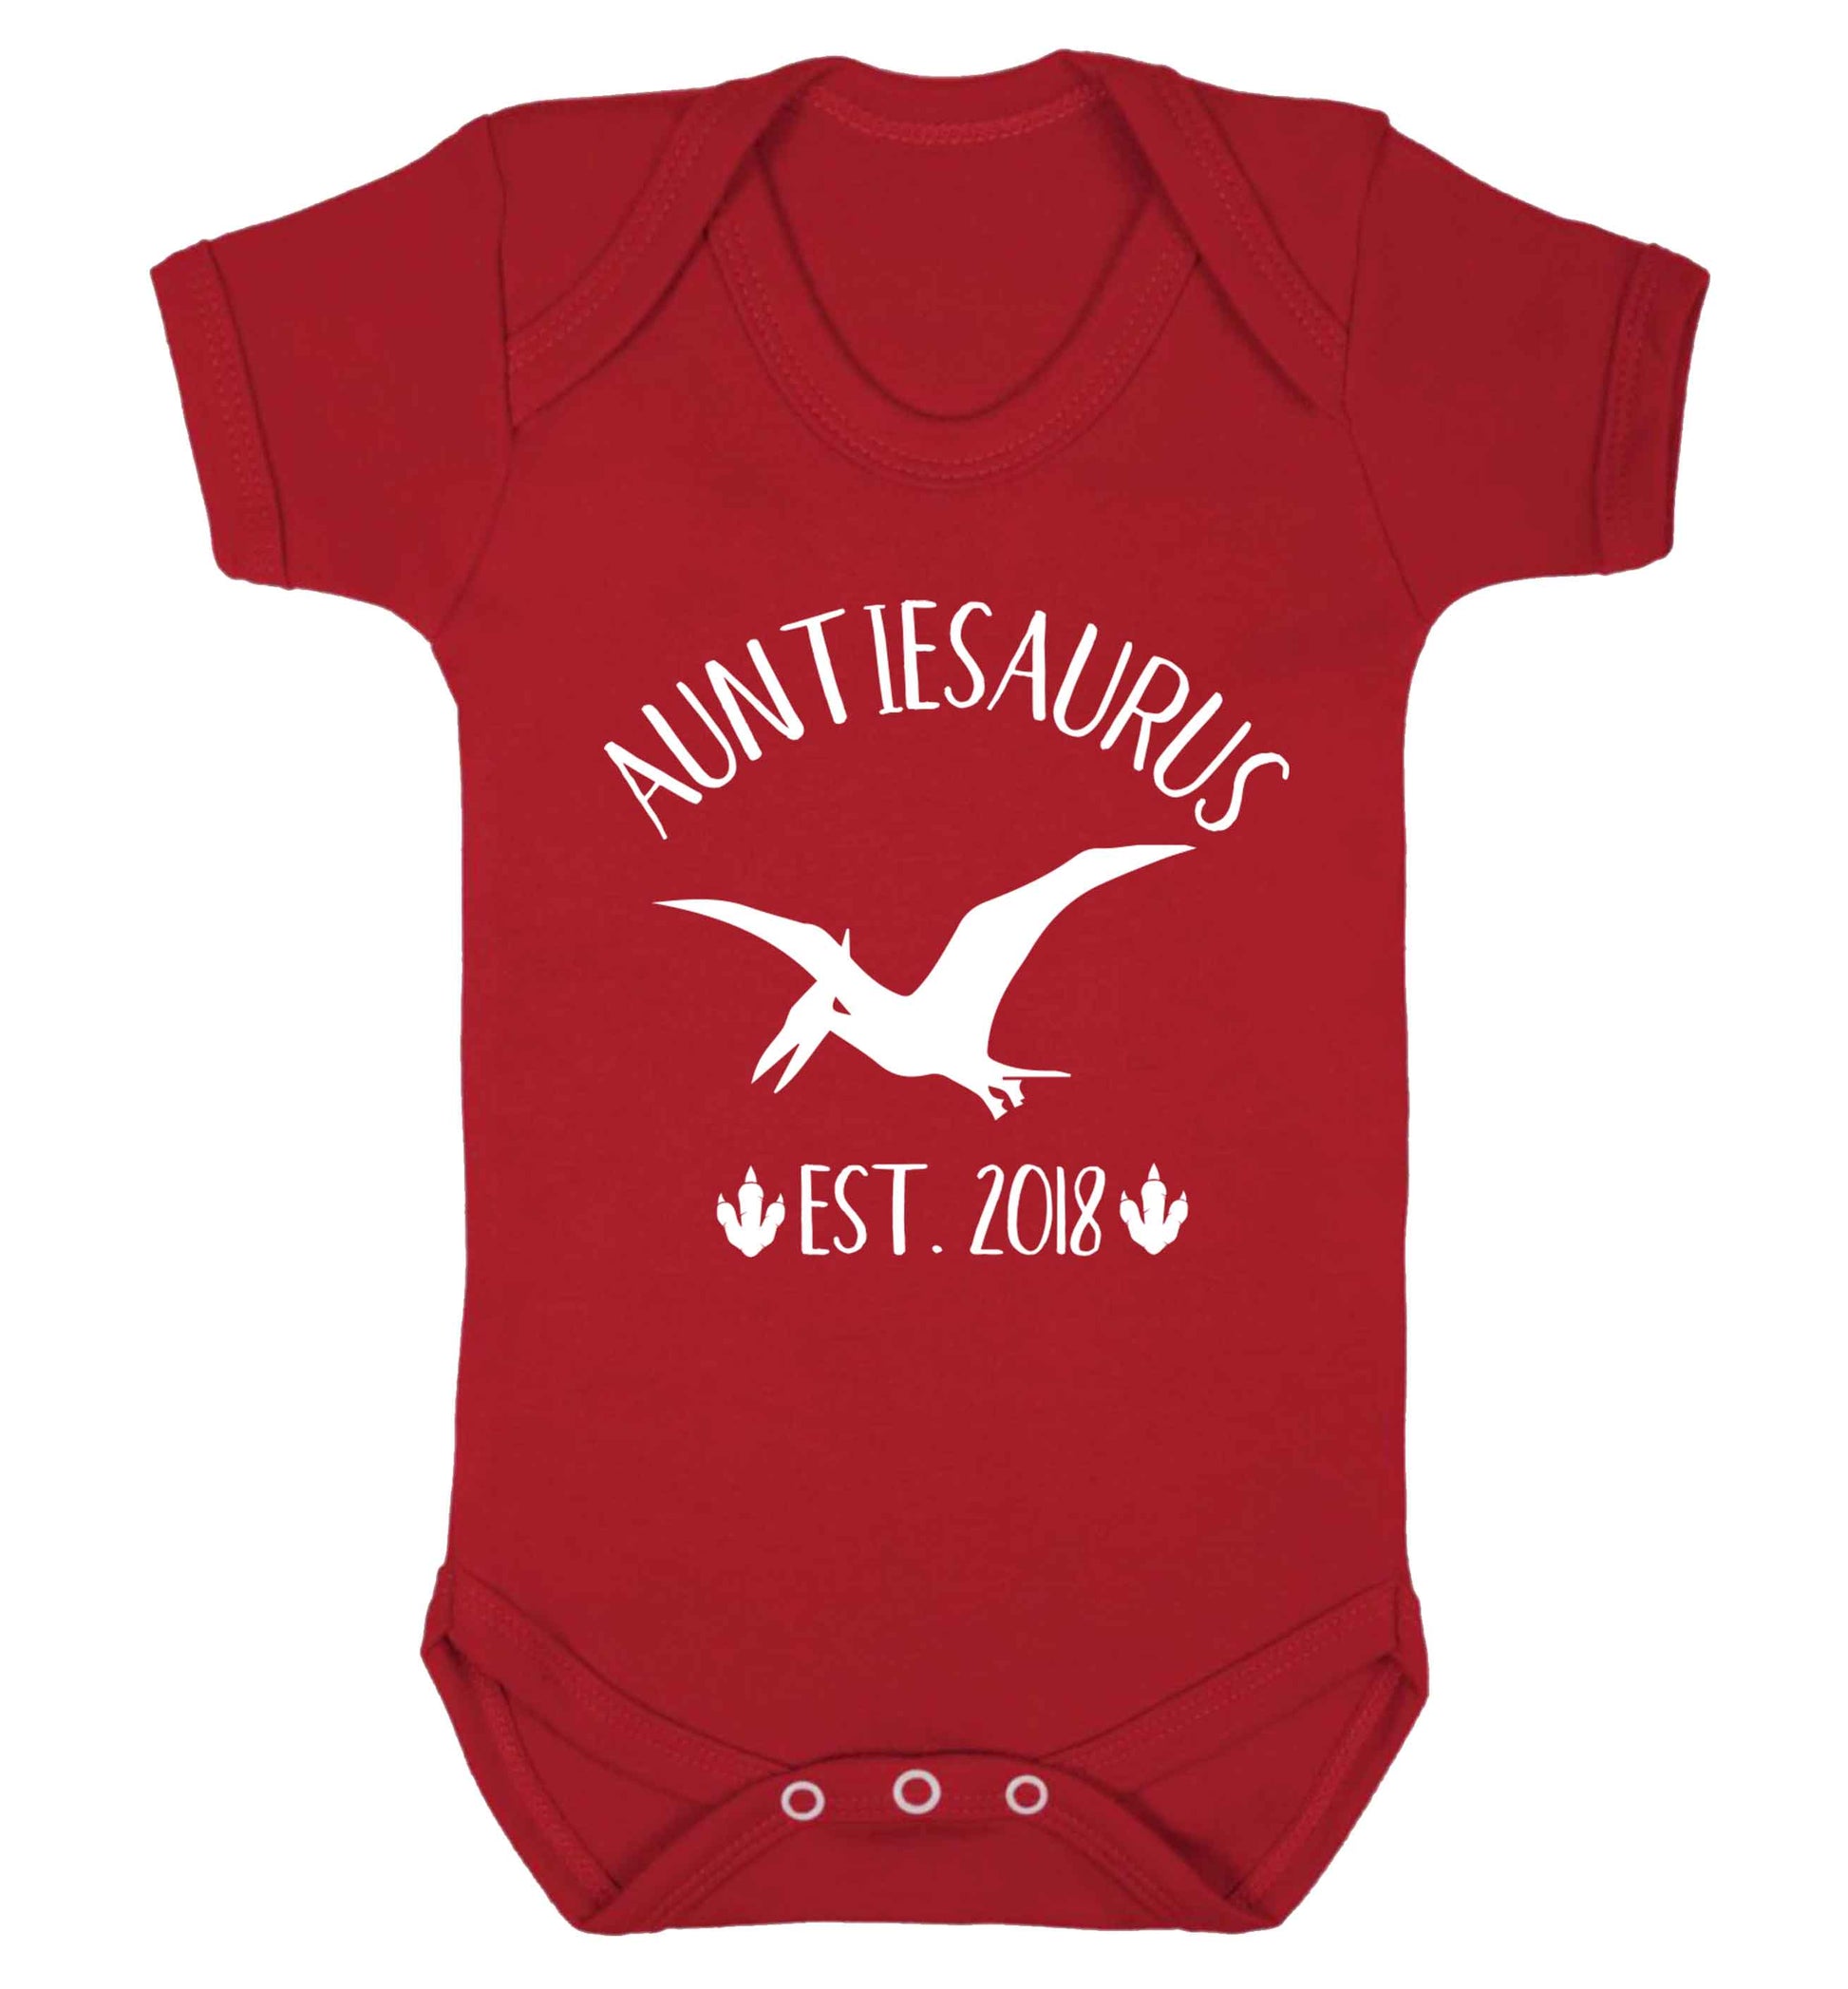 Personalised auntiesaurus since (custom date) Baby Vest red 18-24 months